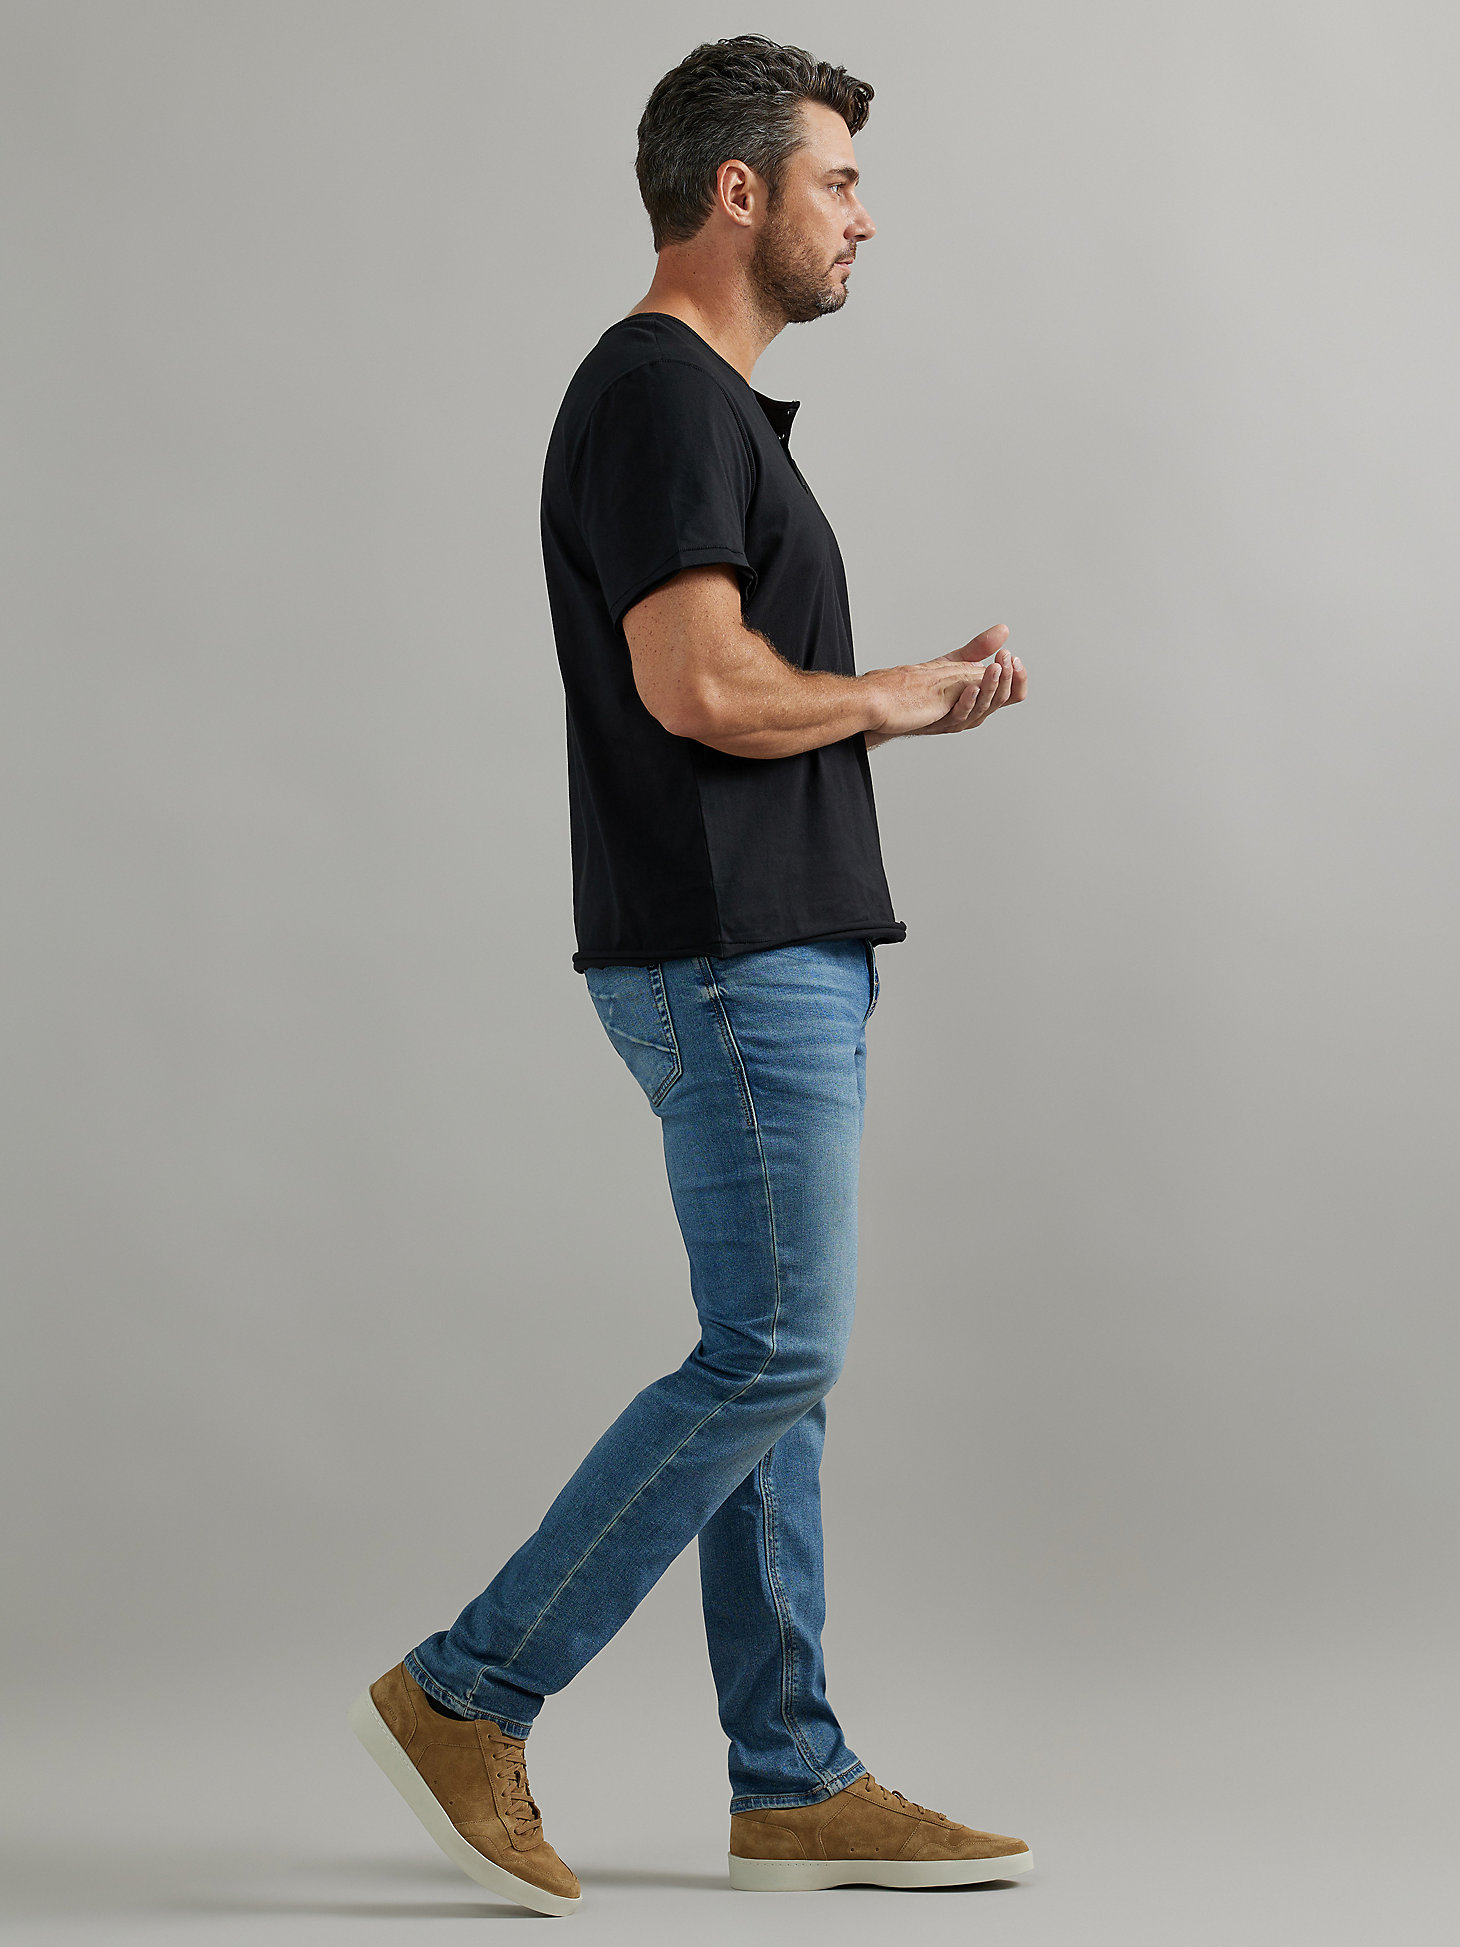 Men's Colburg Slim Fit Straight Jean in Ignition alternative view 7